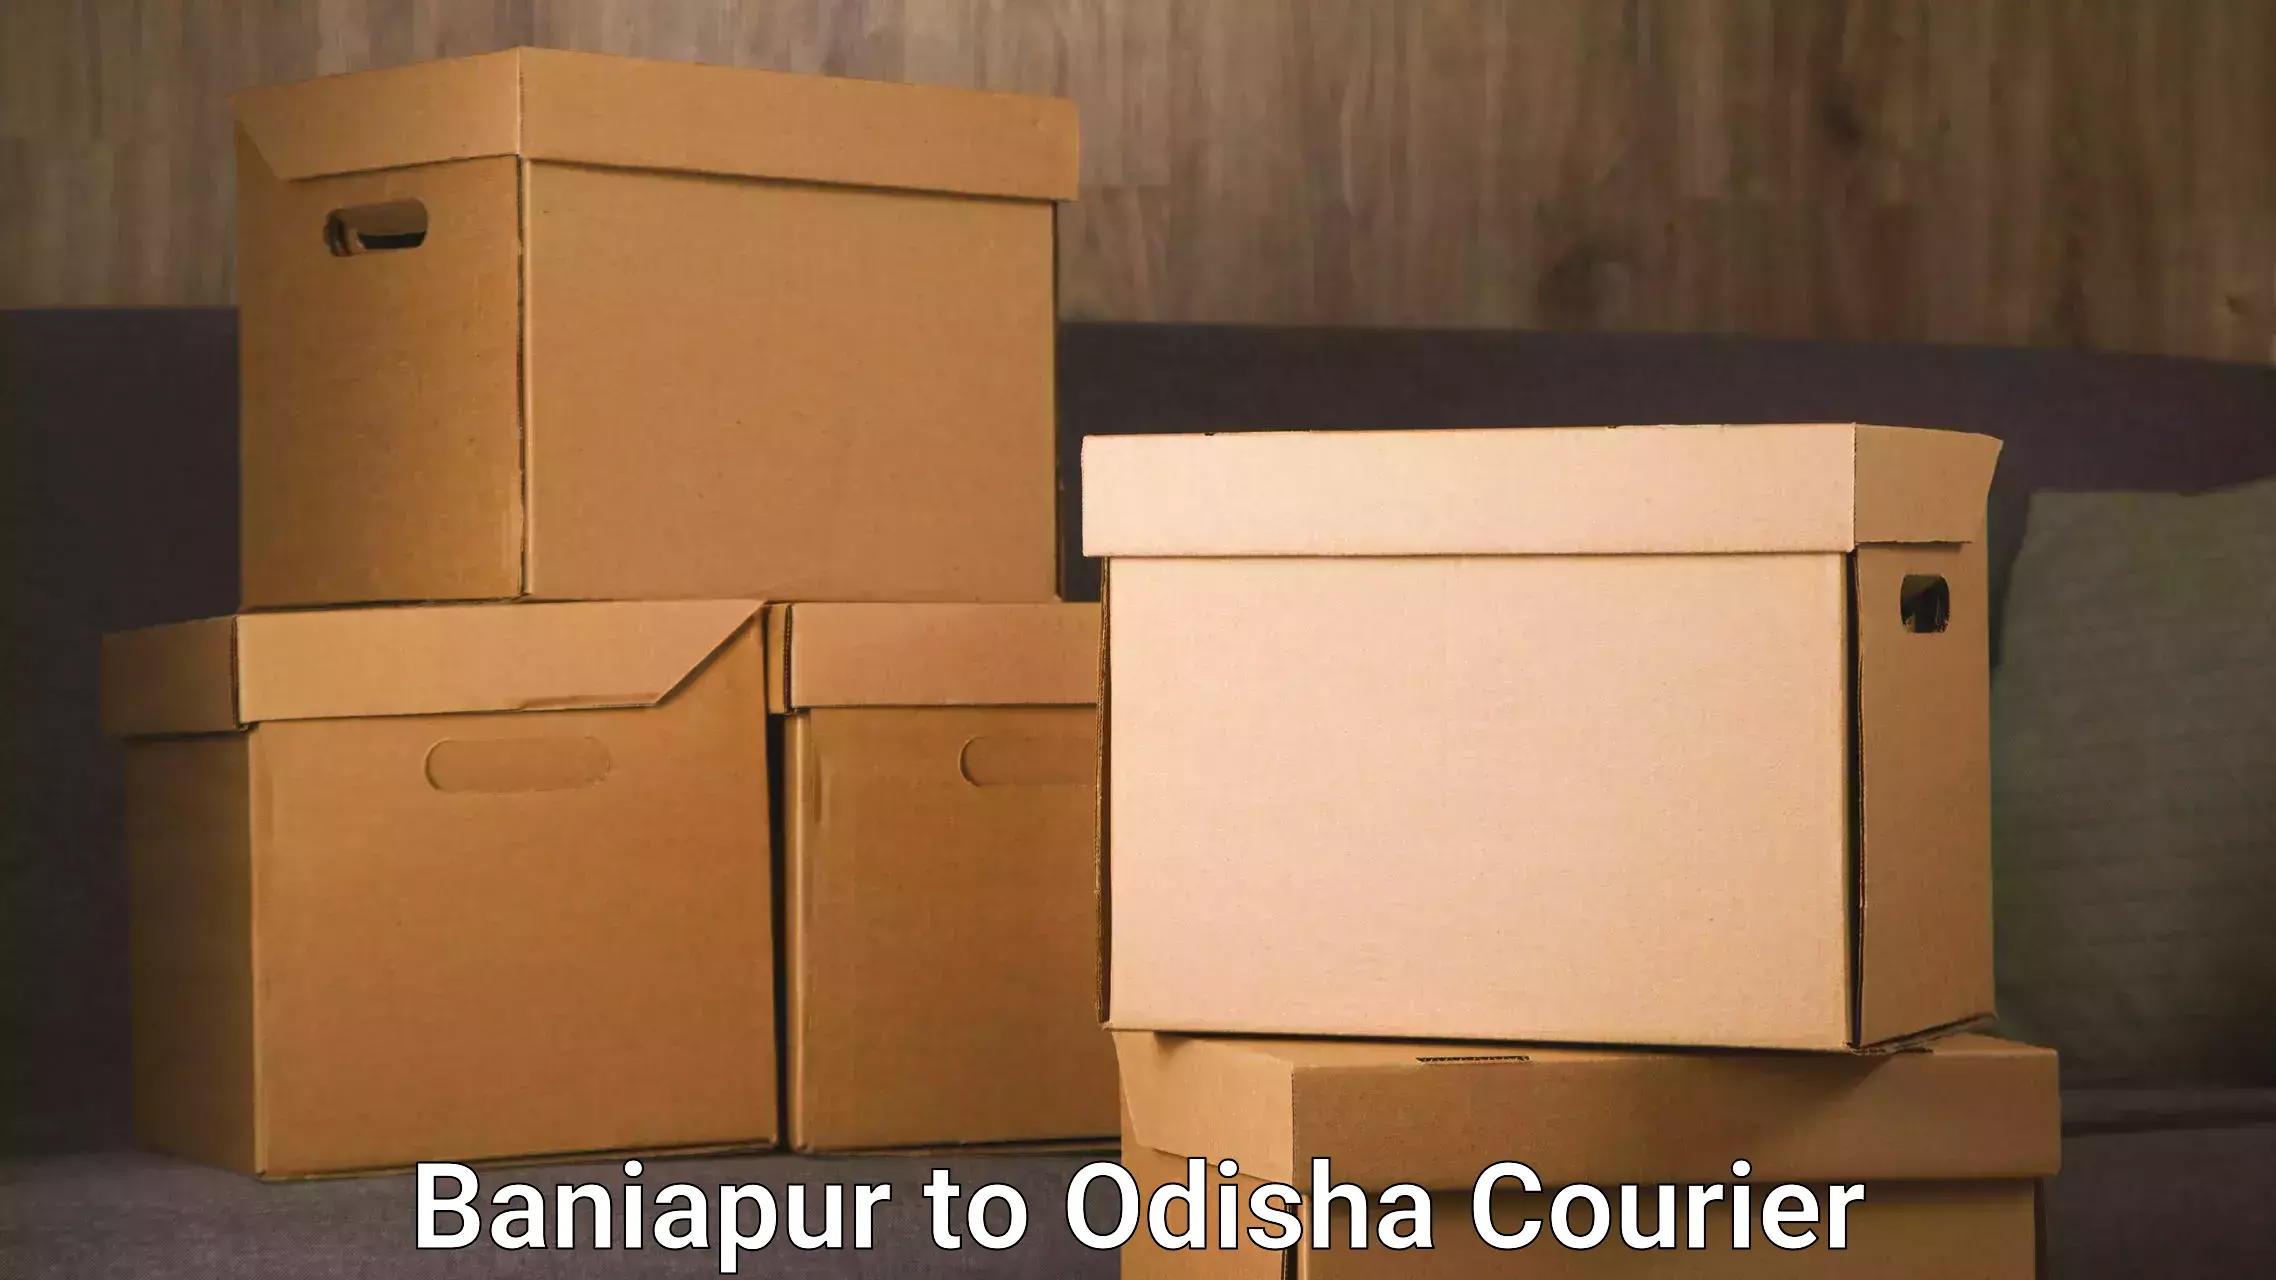 Moving and packing experts Baniapur to Odisha